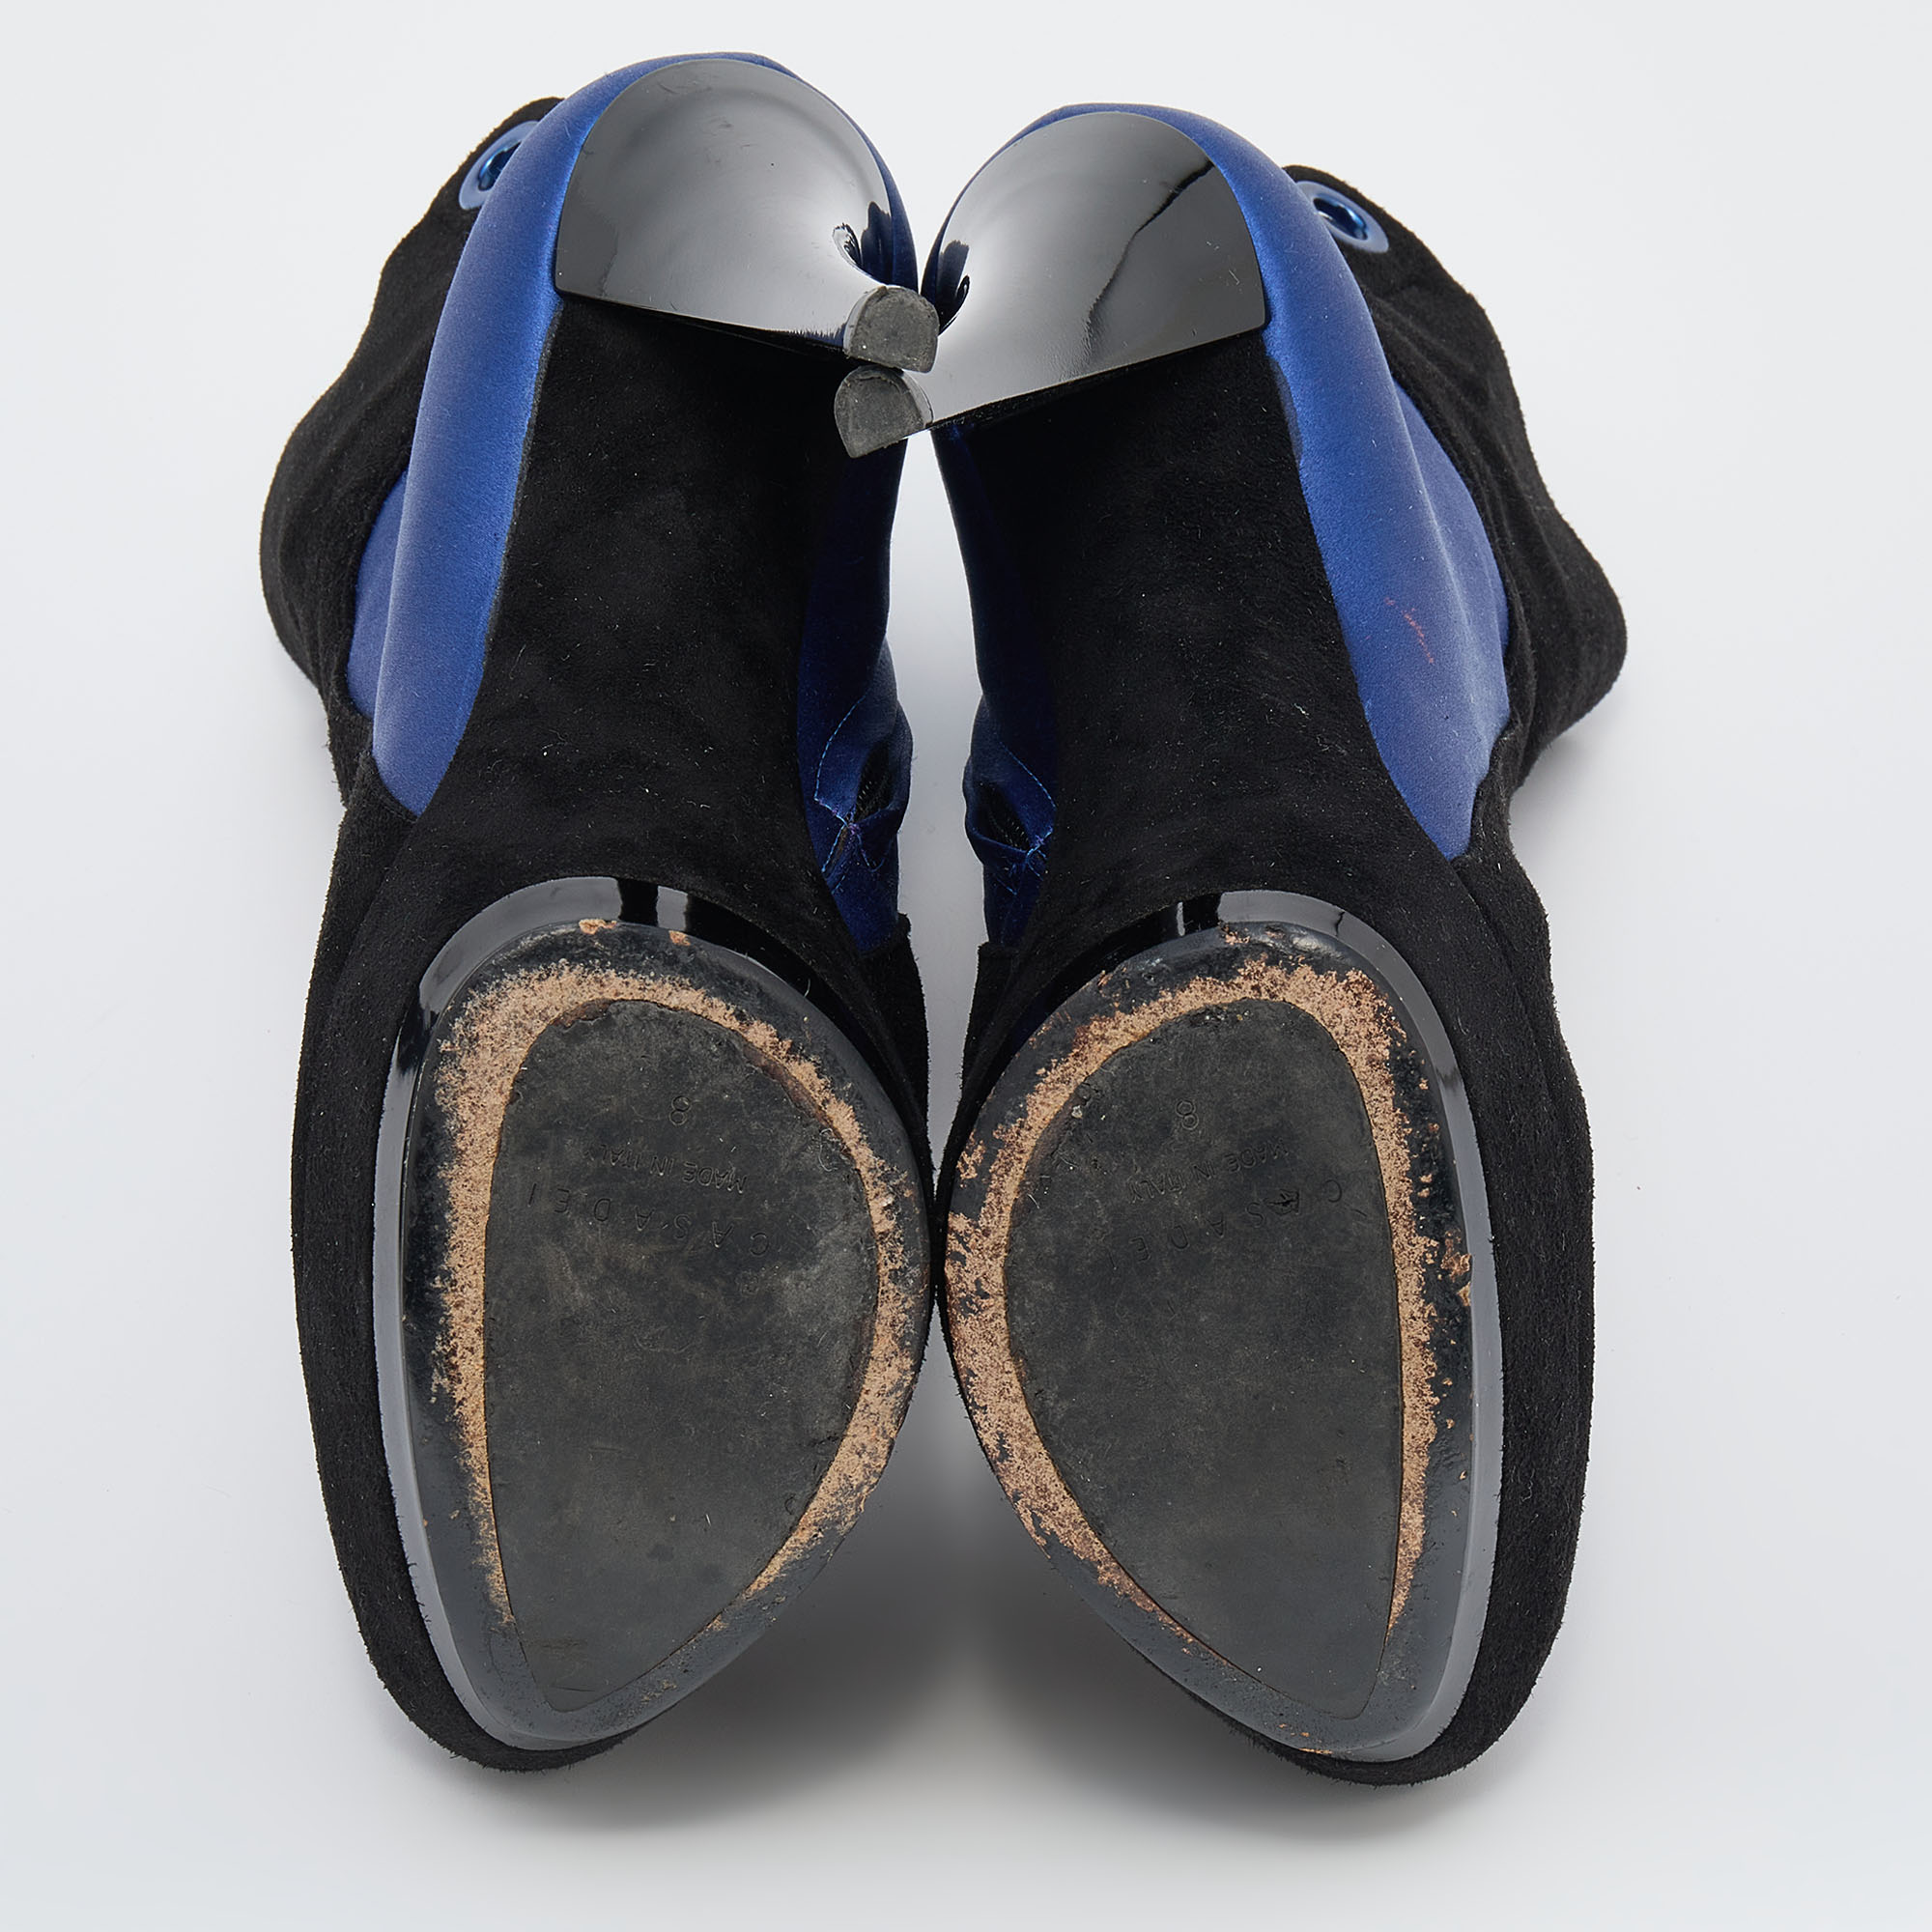 Casadei Black/Blue Suede And Satin Platform Ankle Boots Size 38